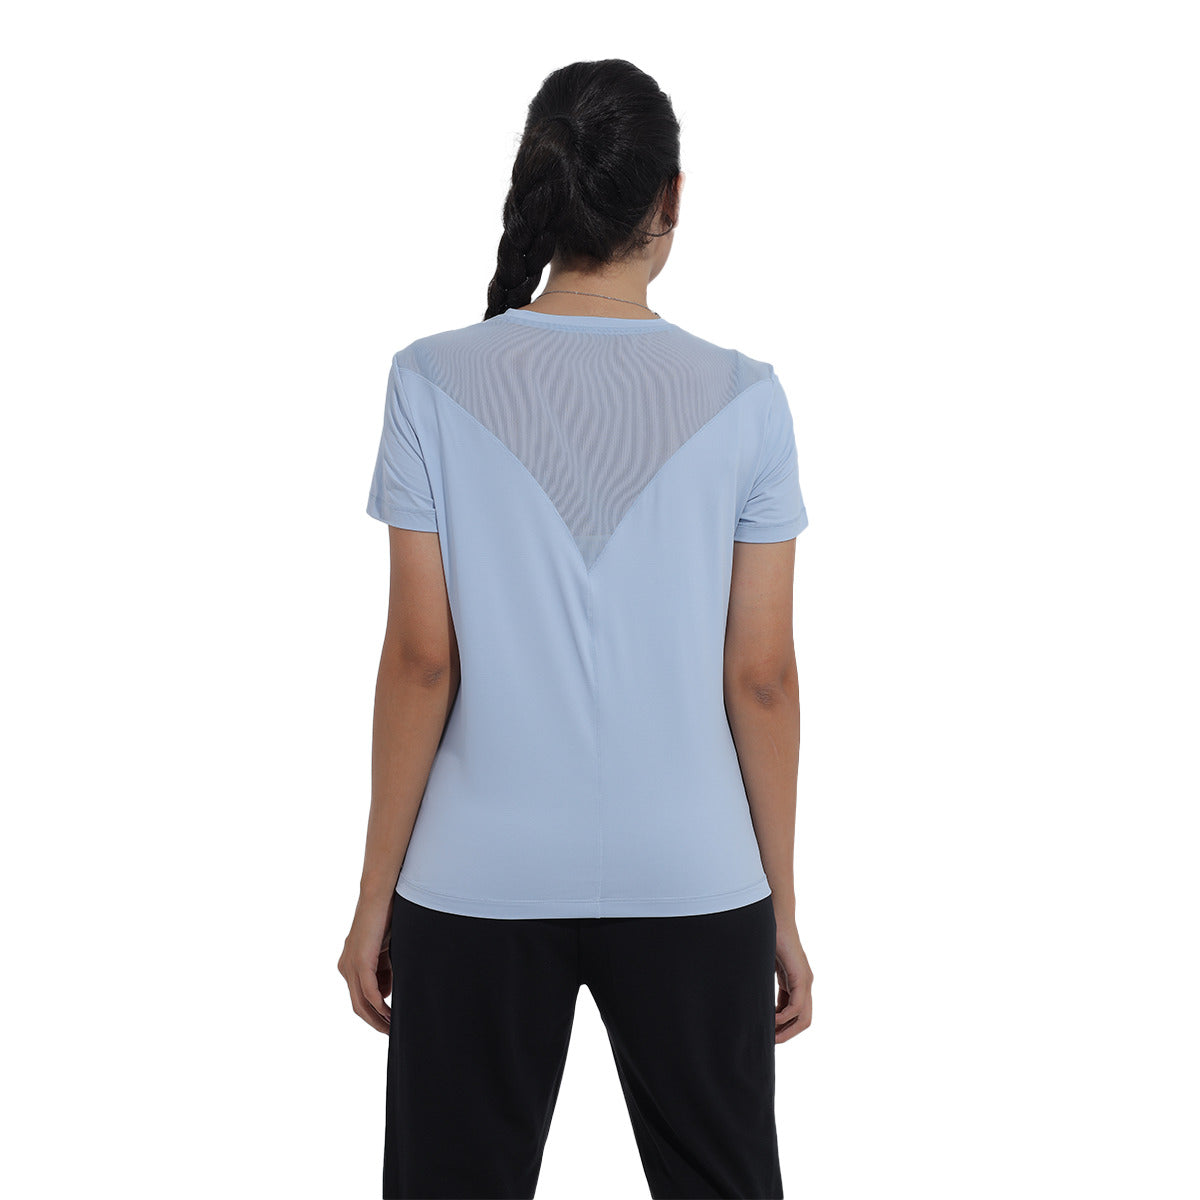 Anta Cross-Training Cotton T-Shirt For Women, Blue